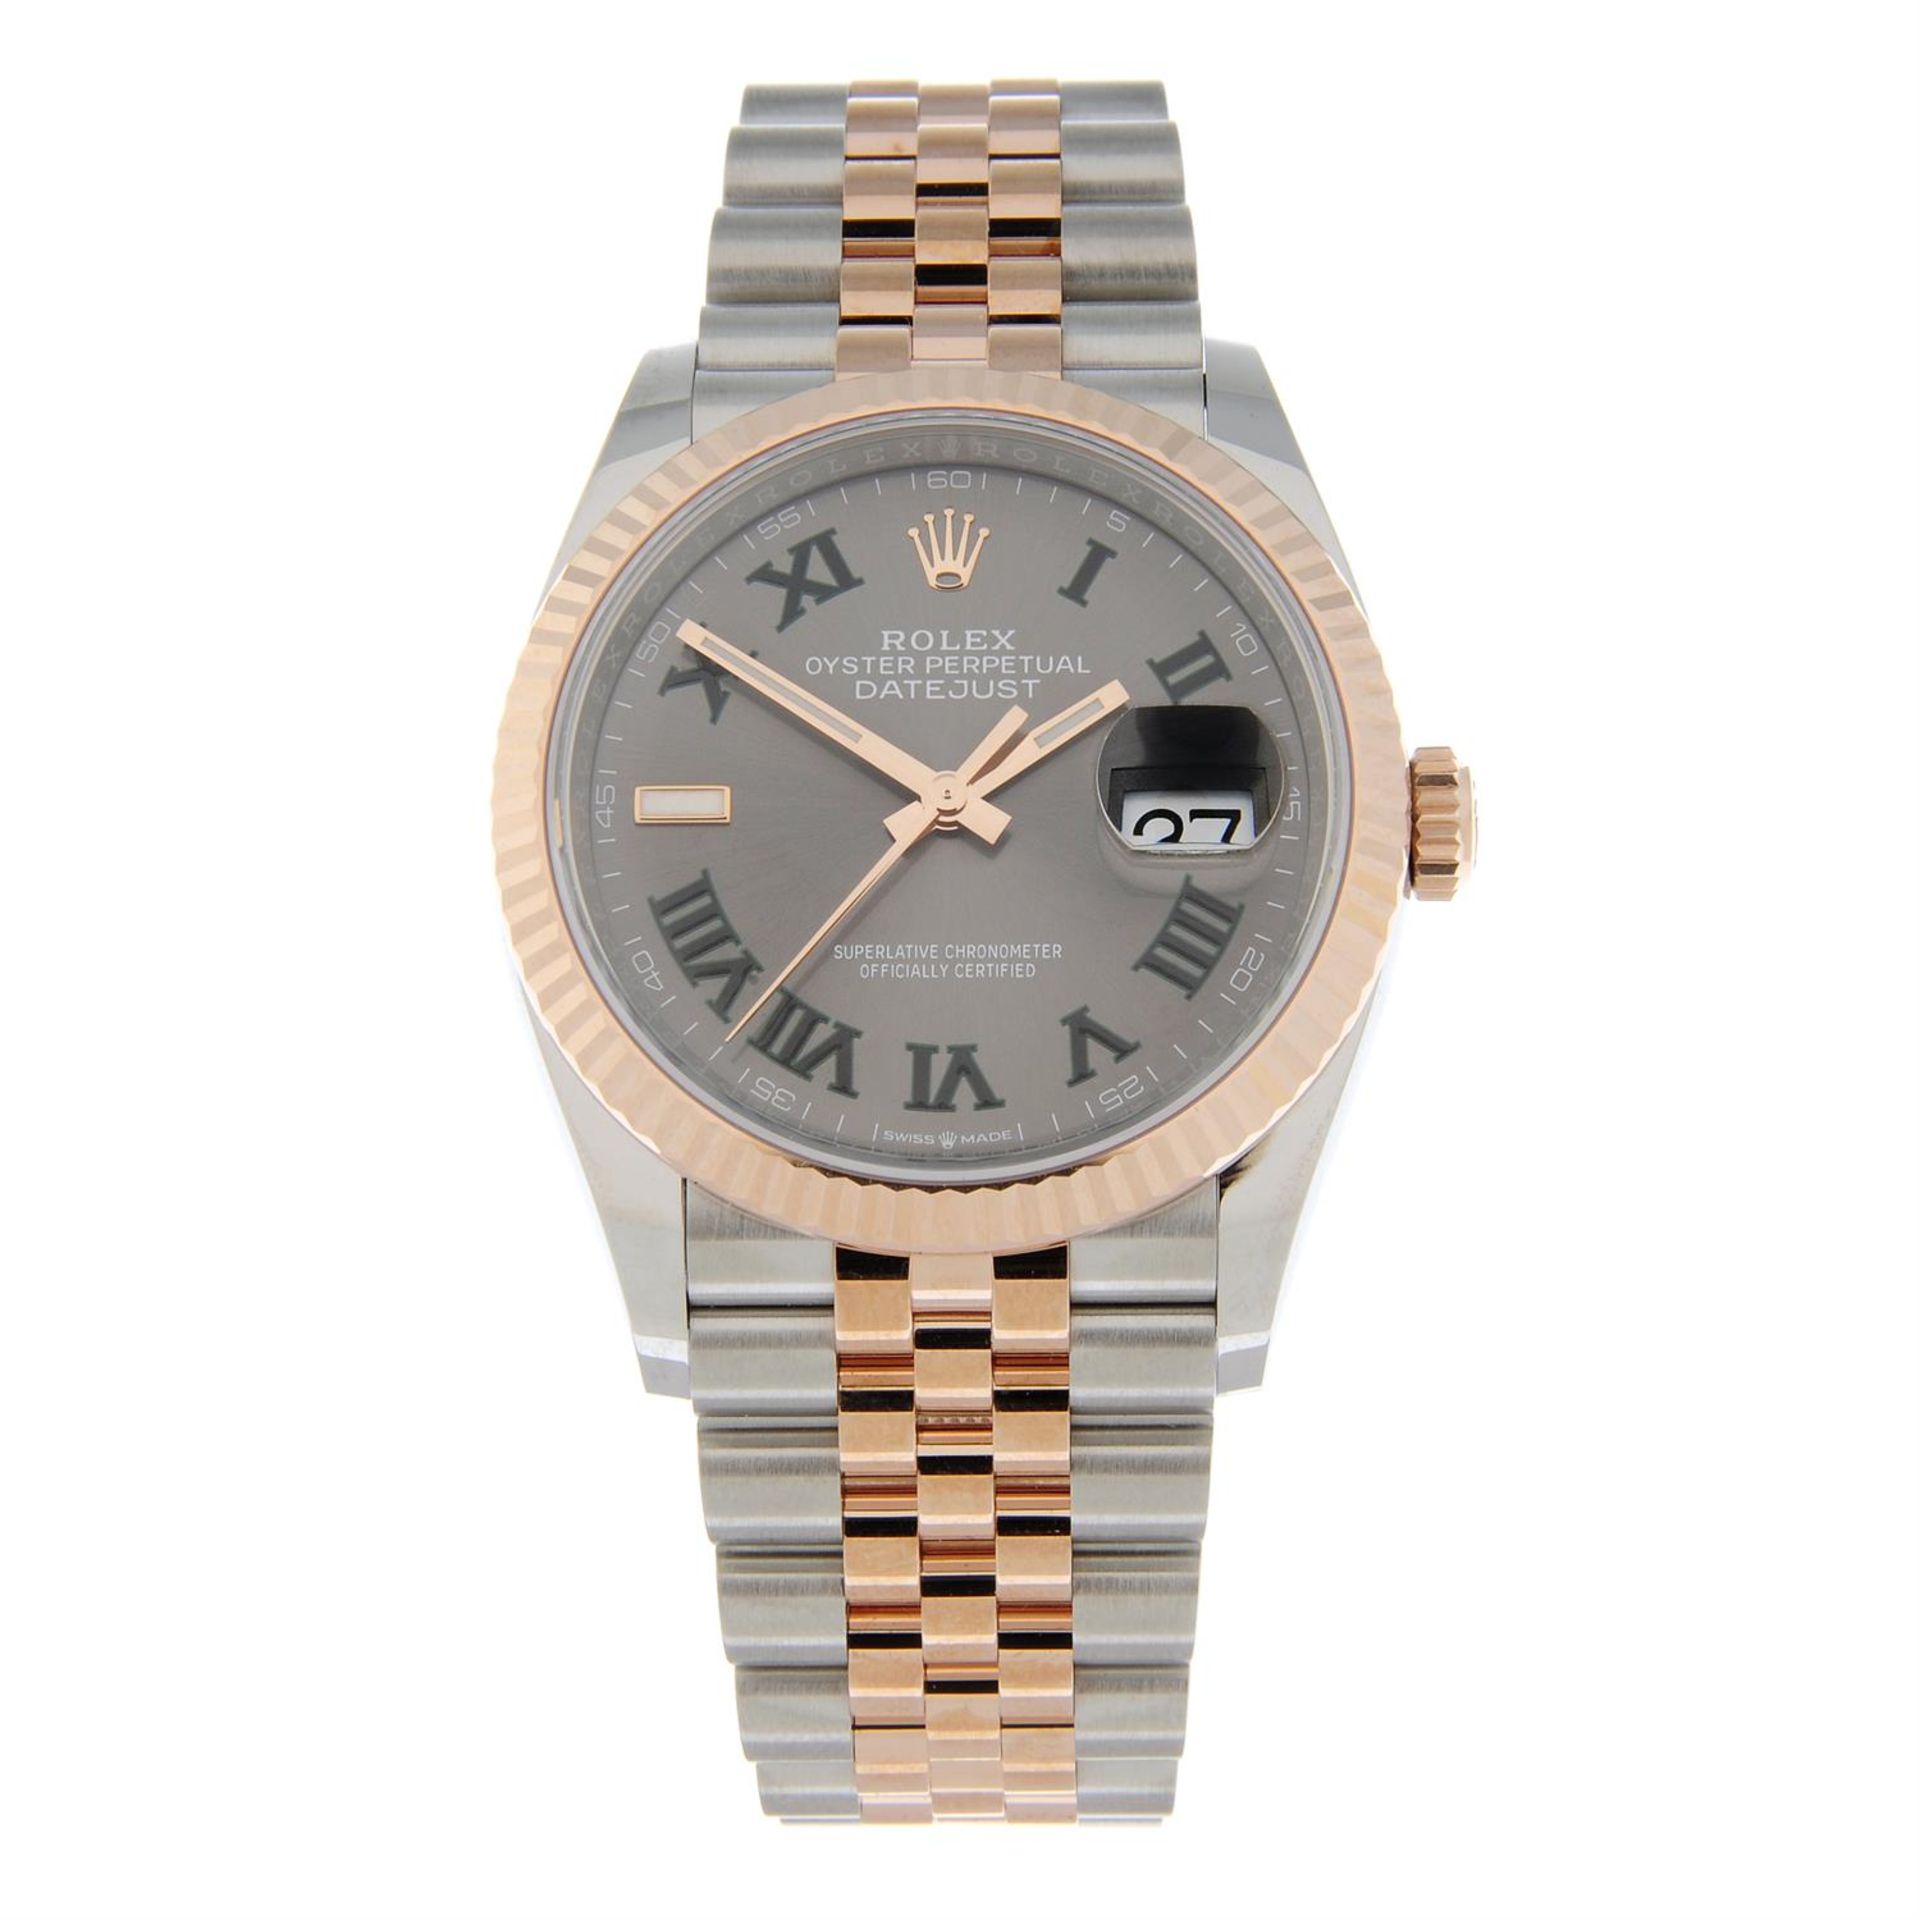 ROLEX - a bi-metal Oyster Perpetual Datejust bracelet watch, 36mm.